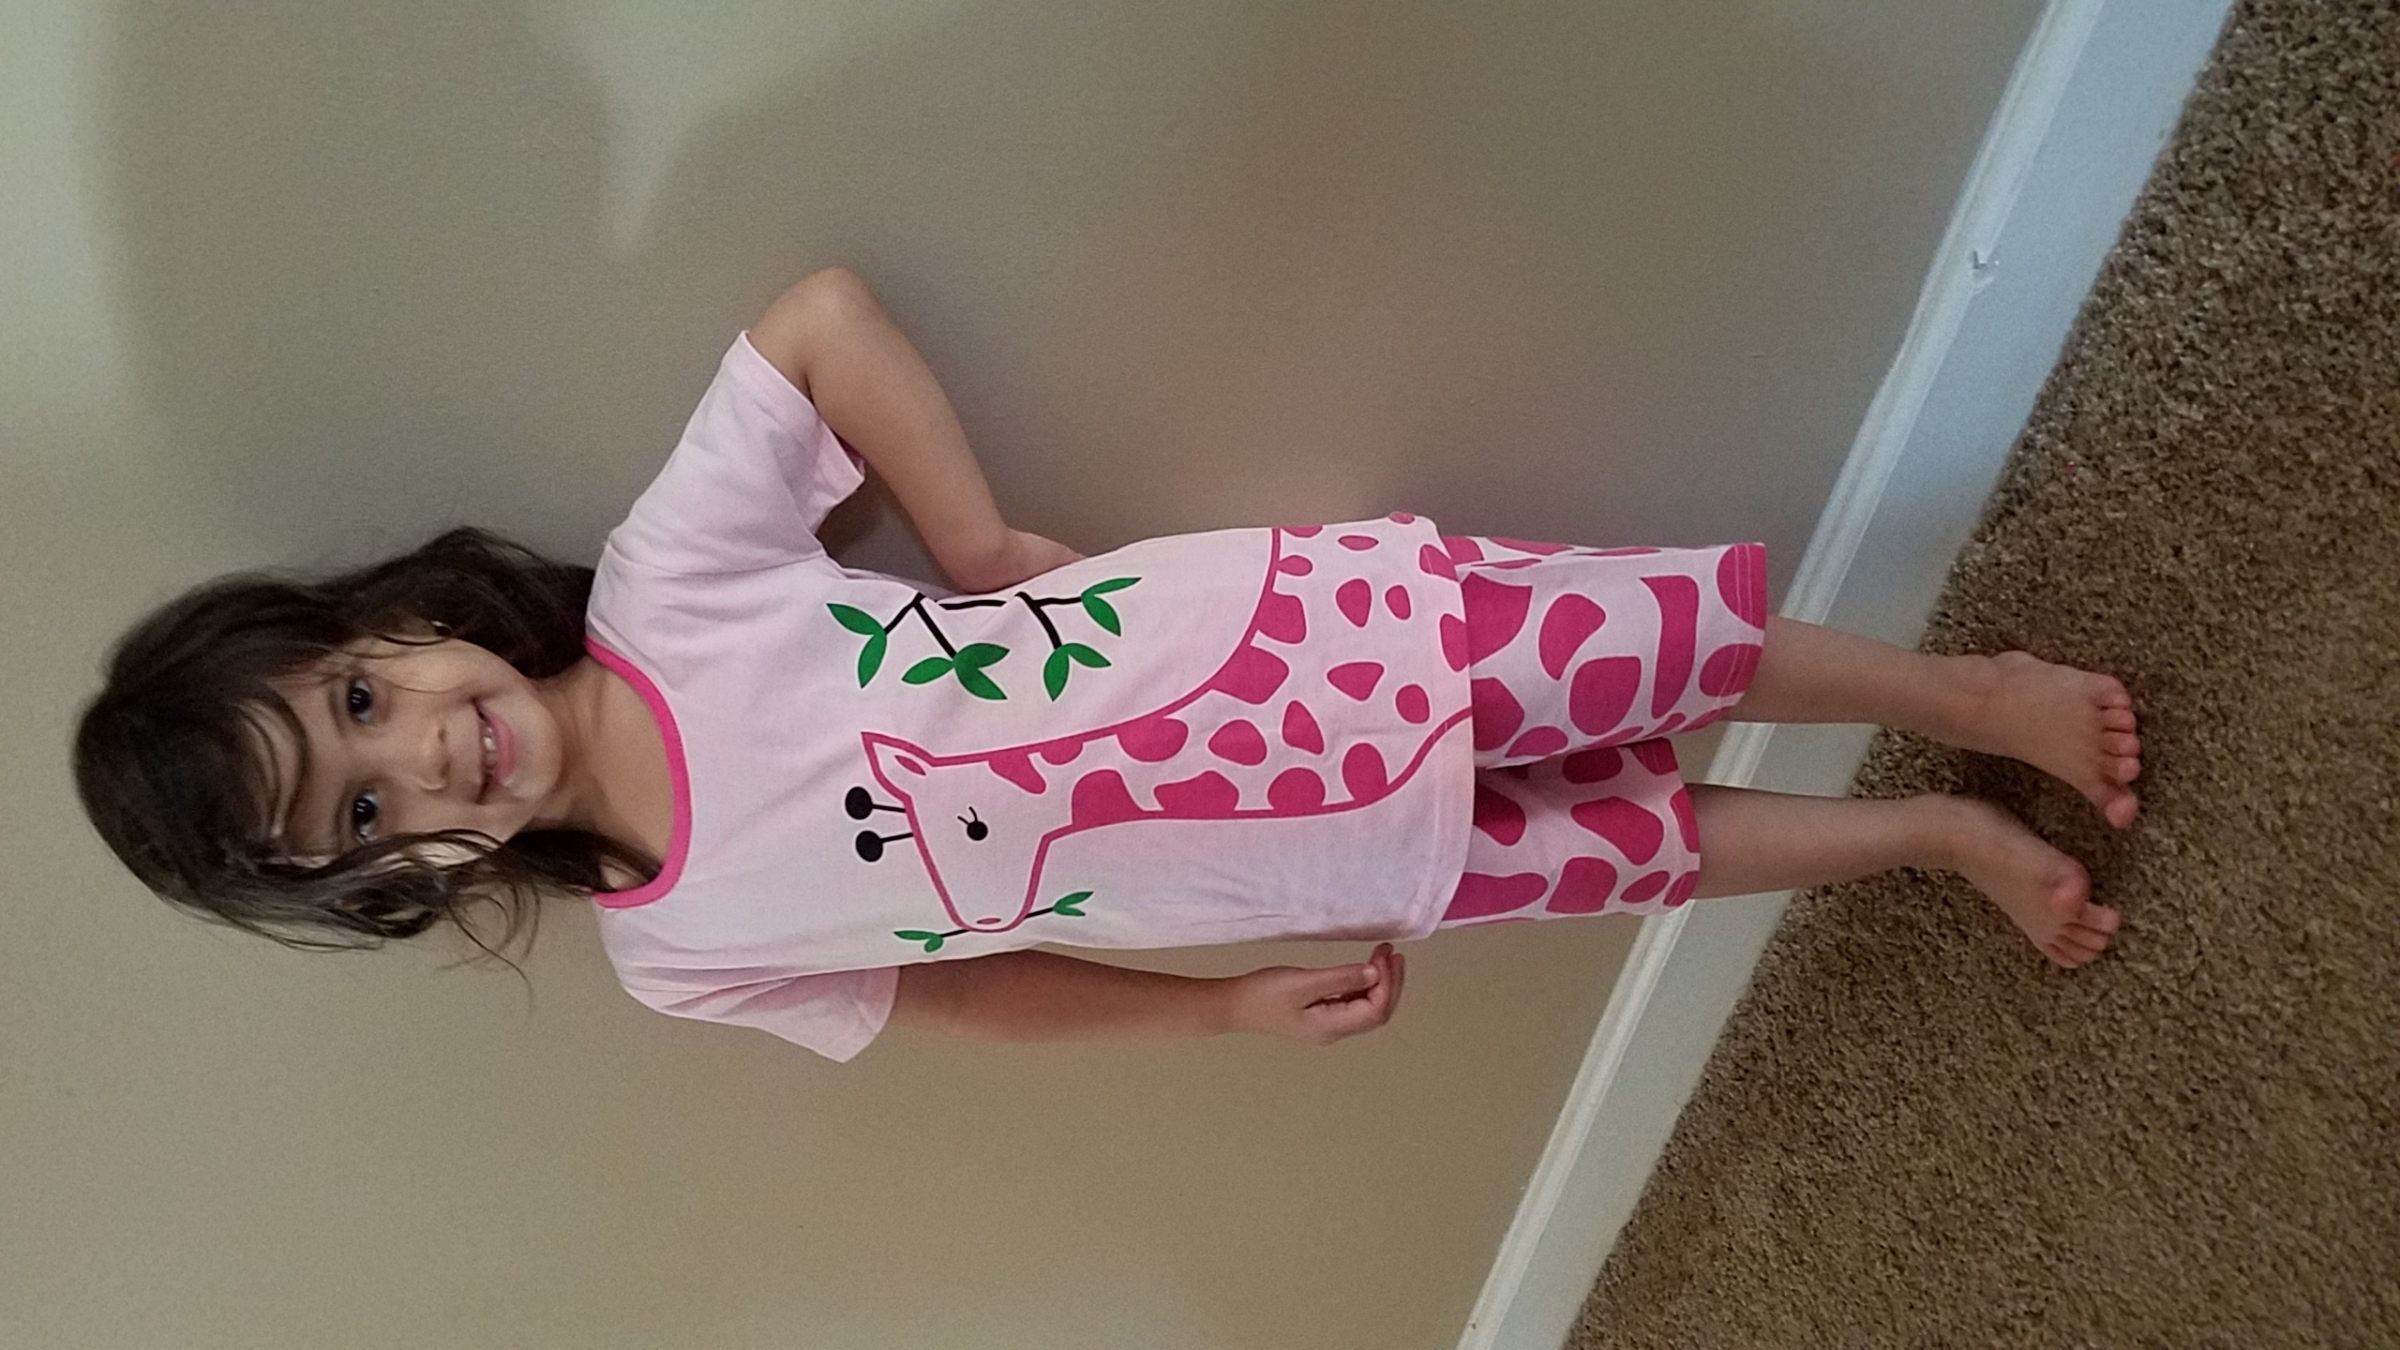 She loves this pajama!